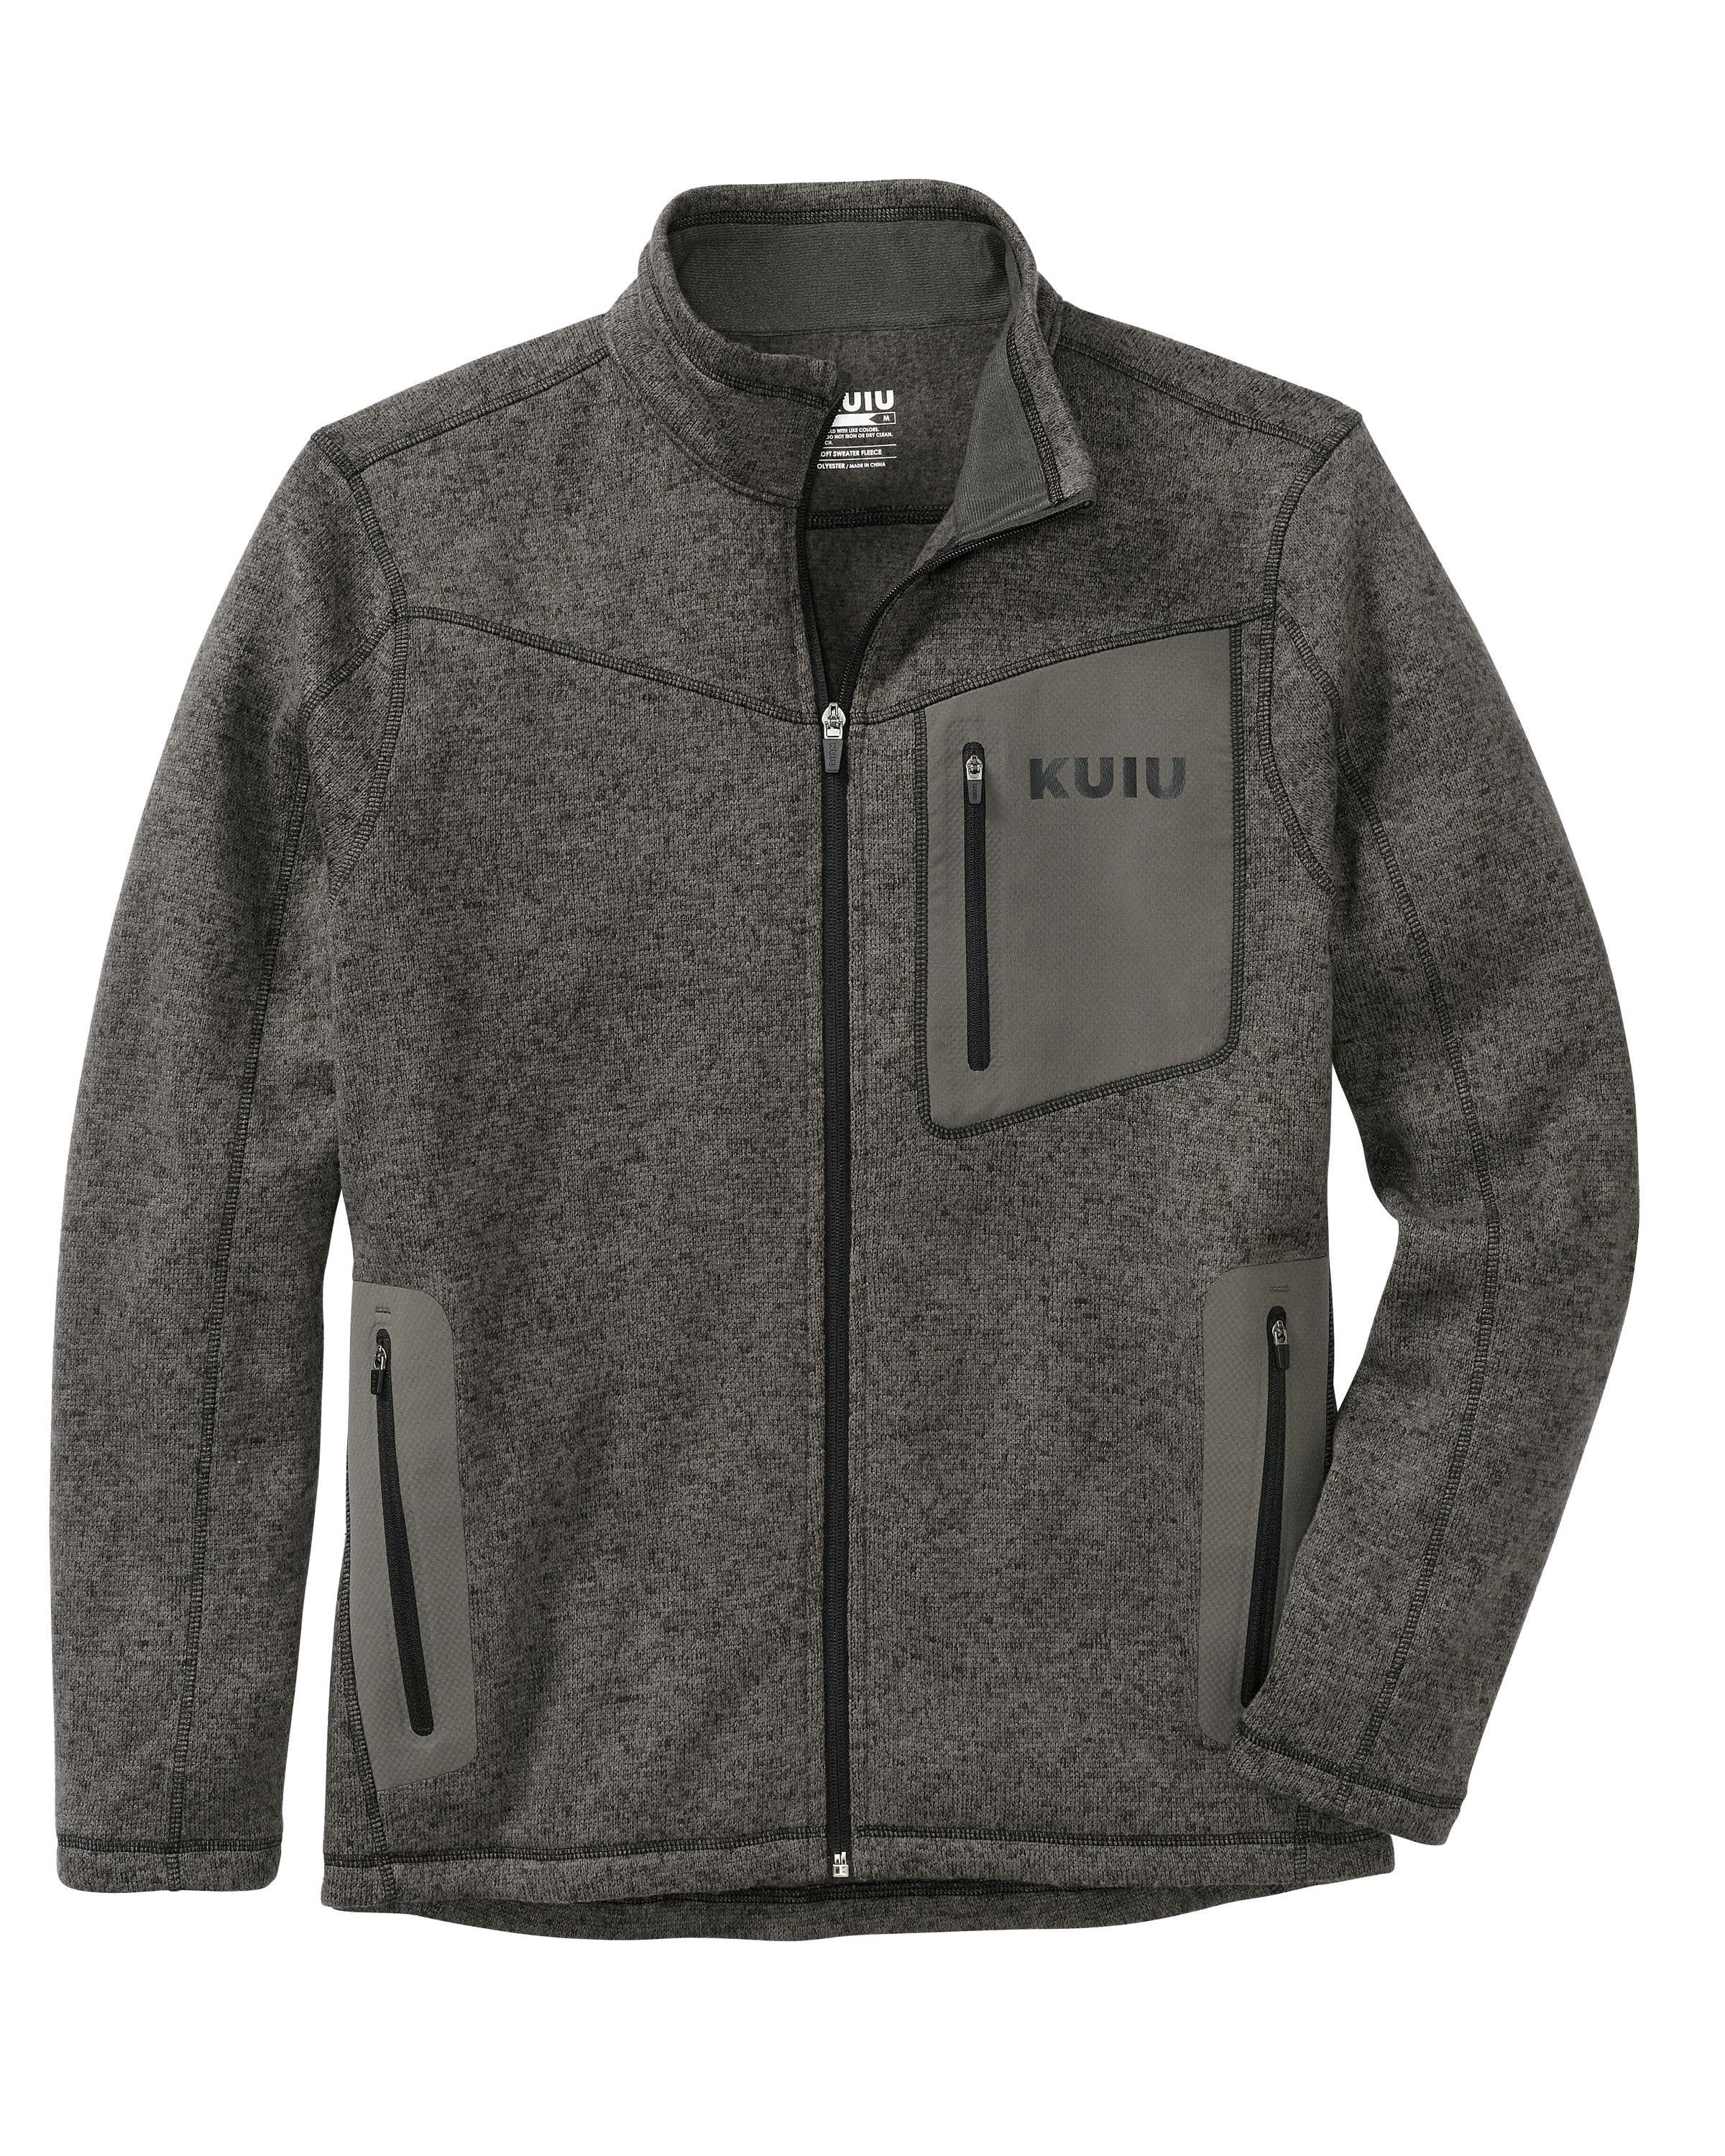 KUIU Base Camp Full Zip Sweater in Charcoal | Size XL